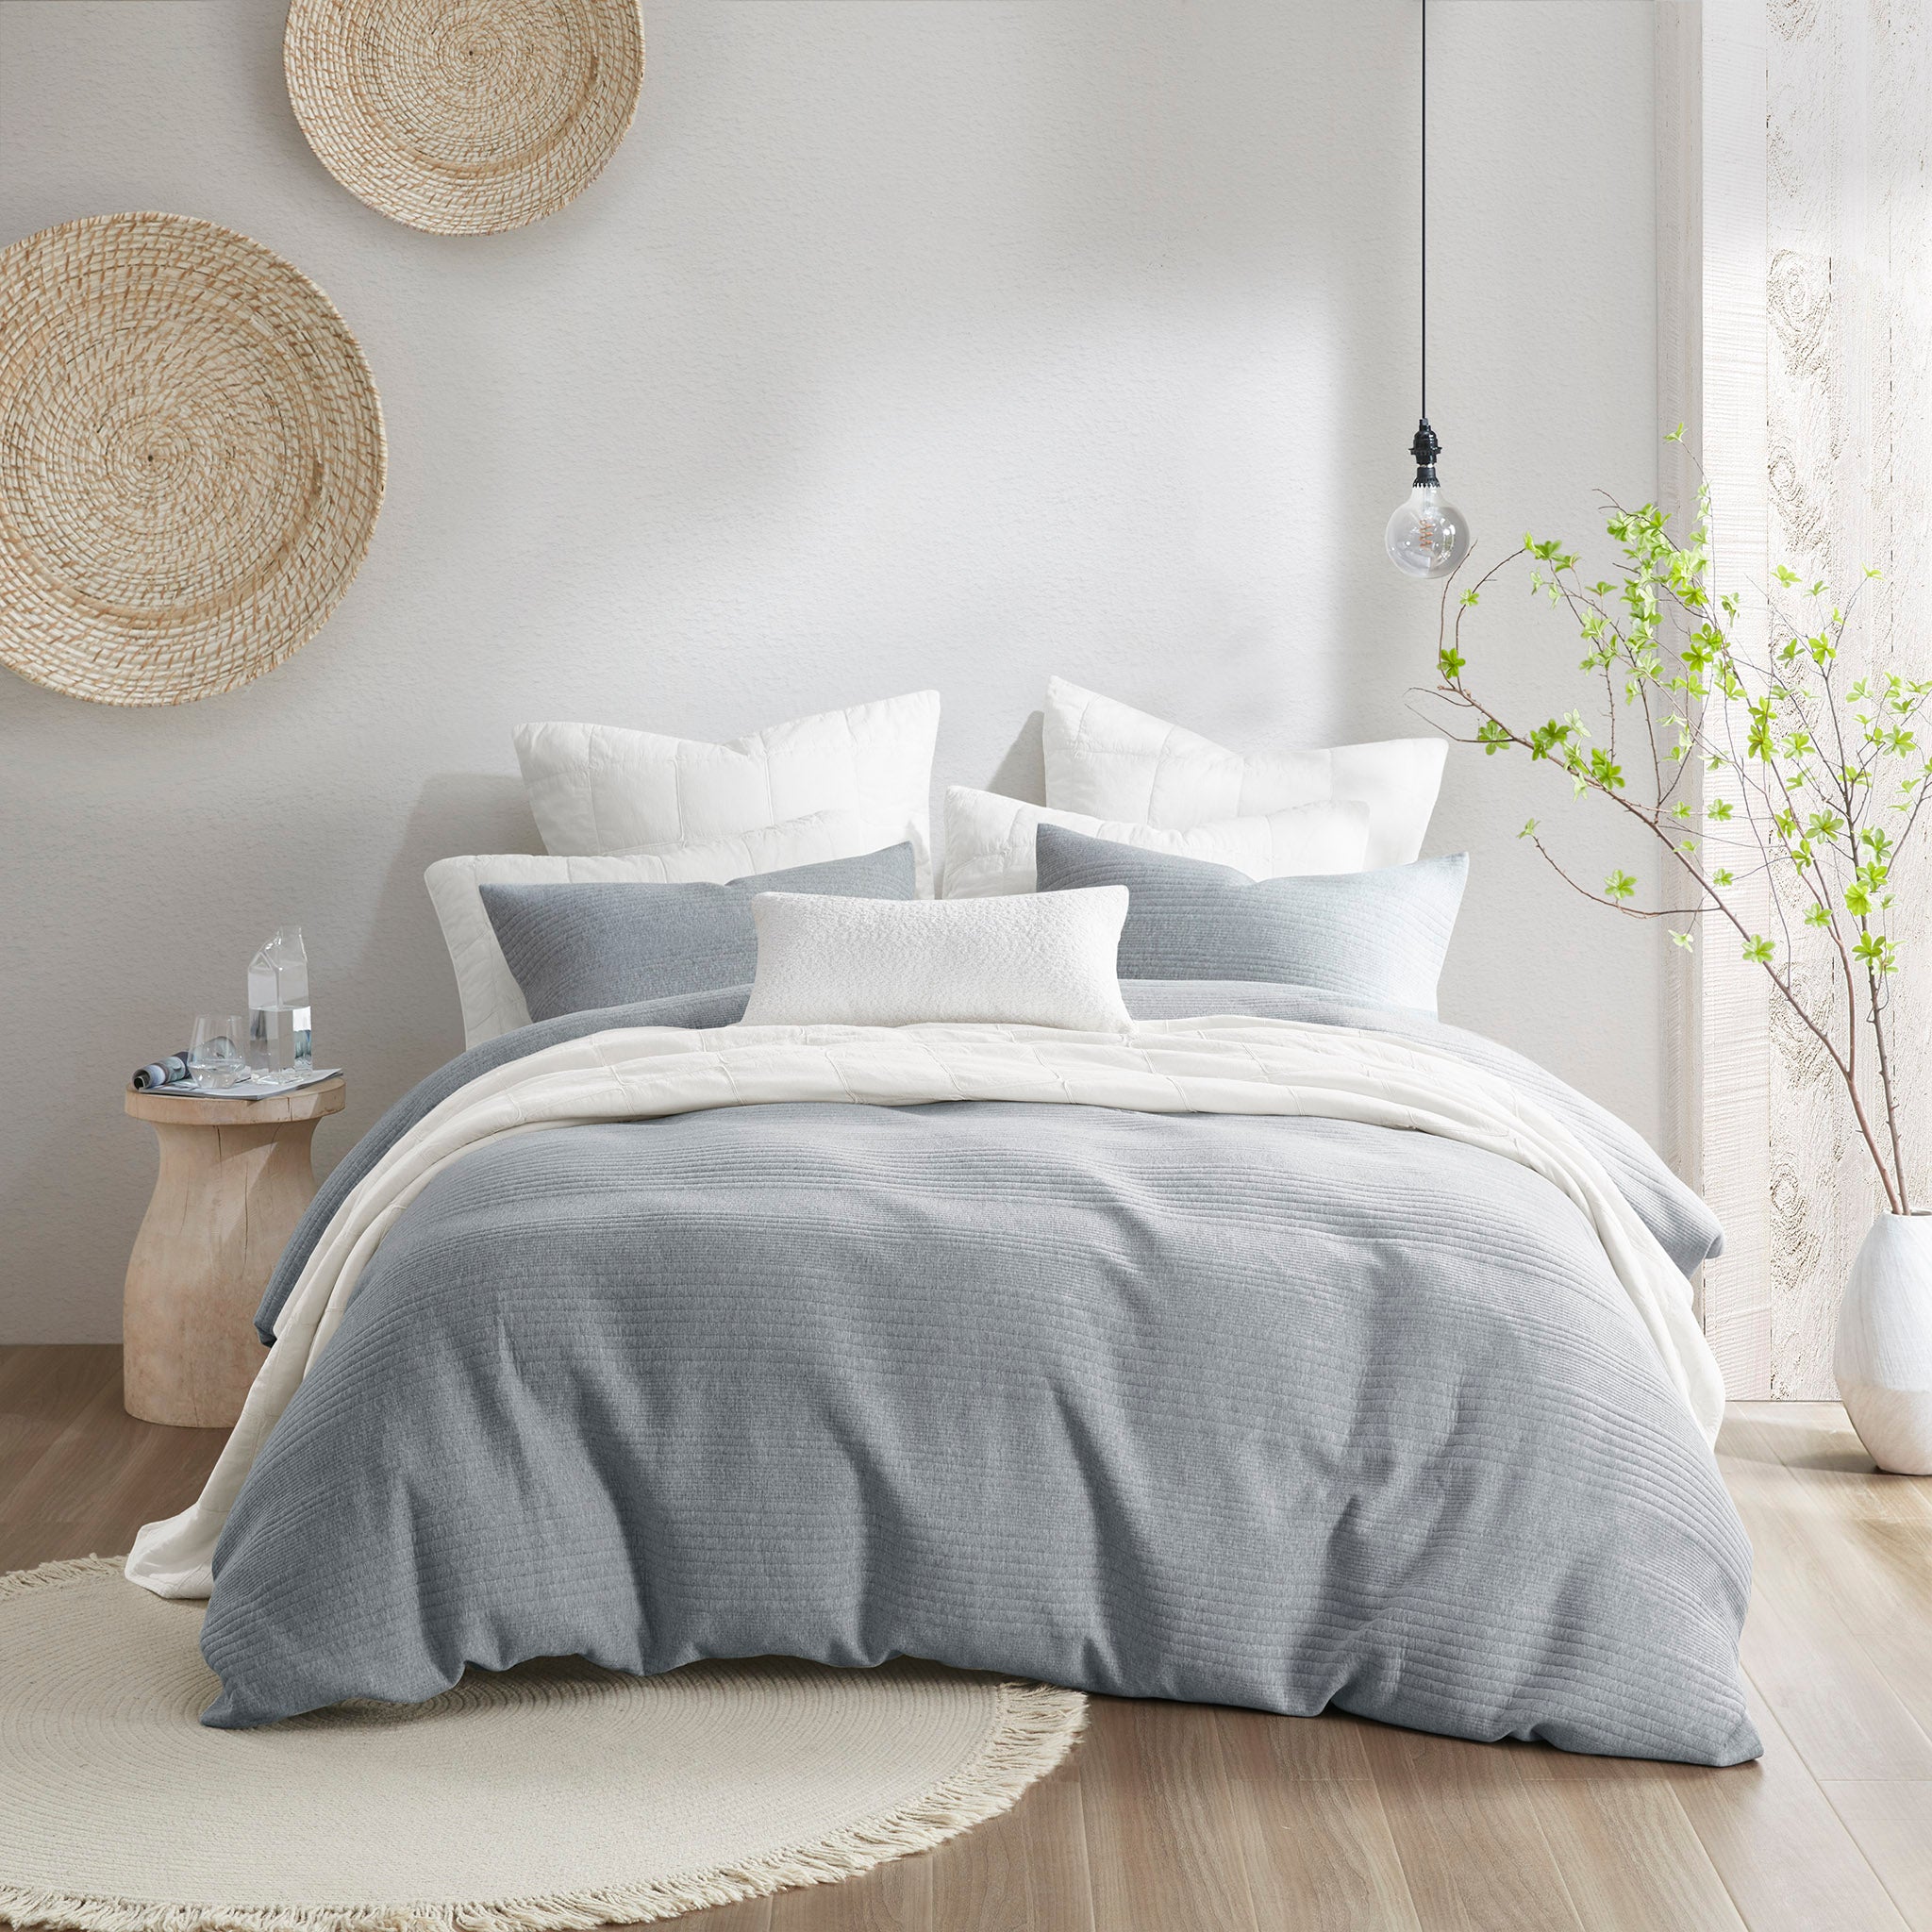 Croscill Beddings - Decorative Pillows & Comforter Sets in Full / Queen ...